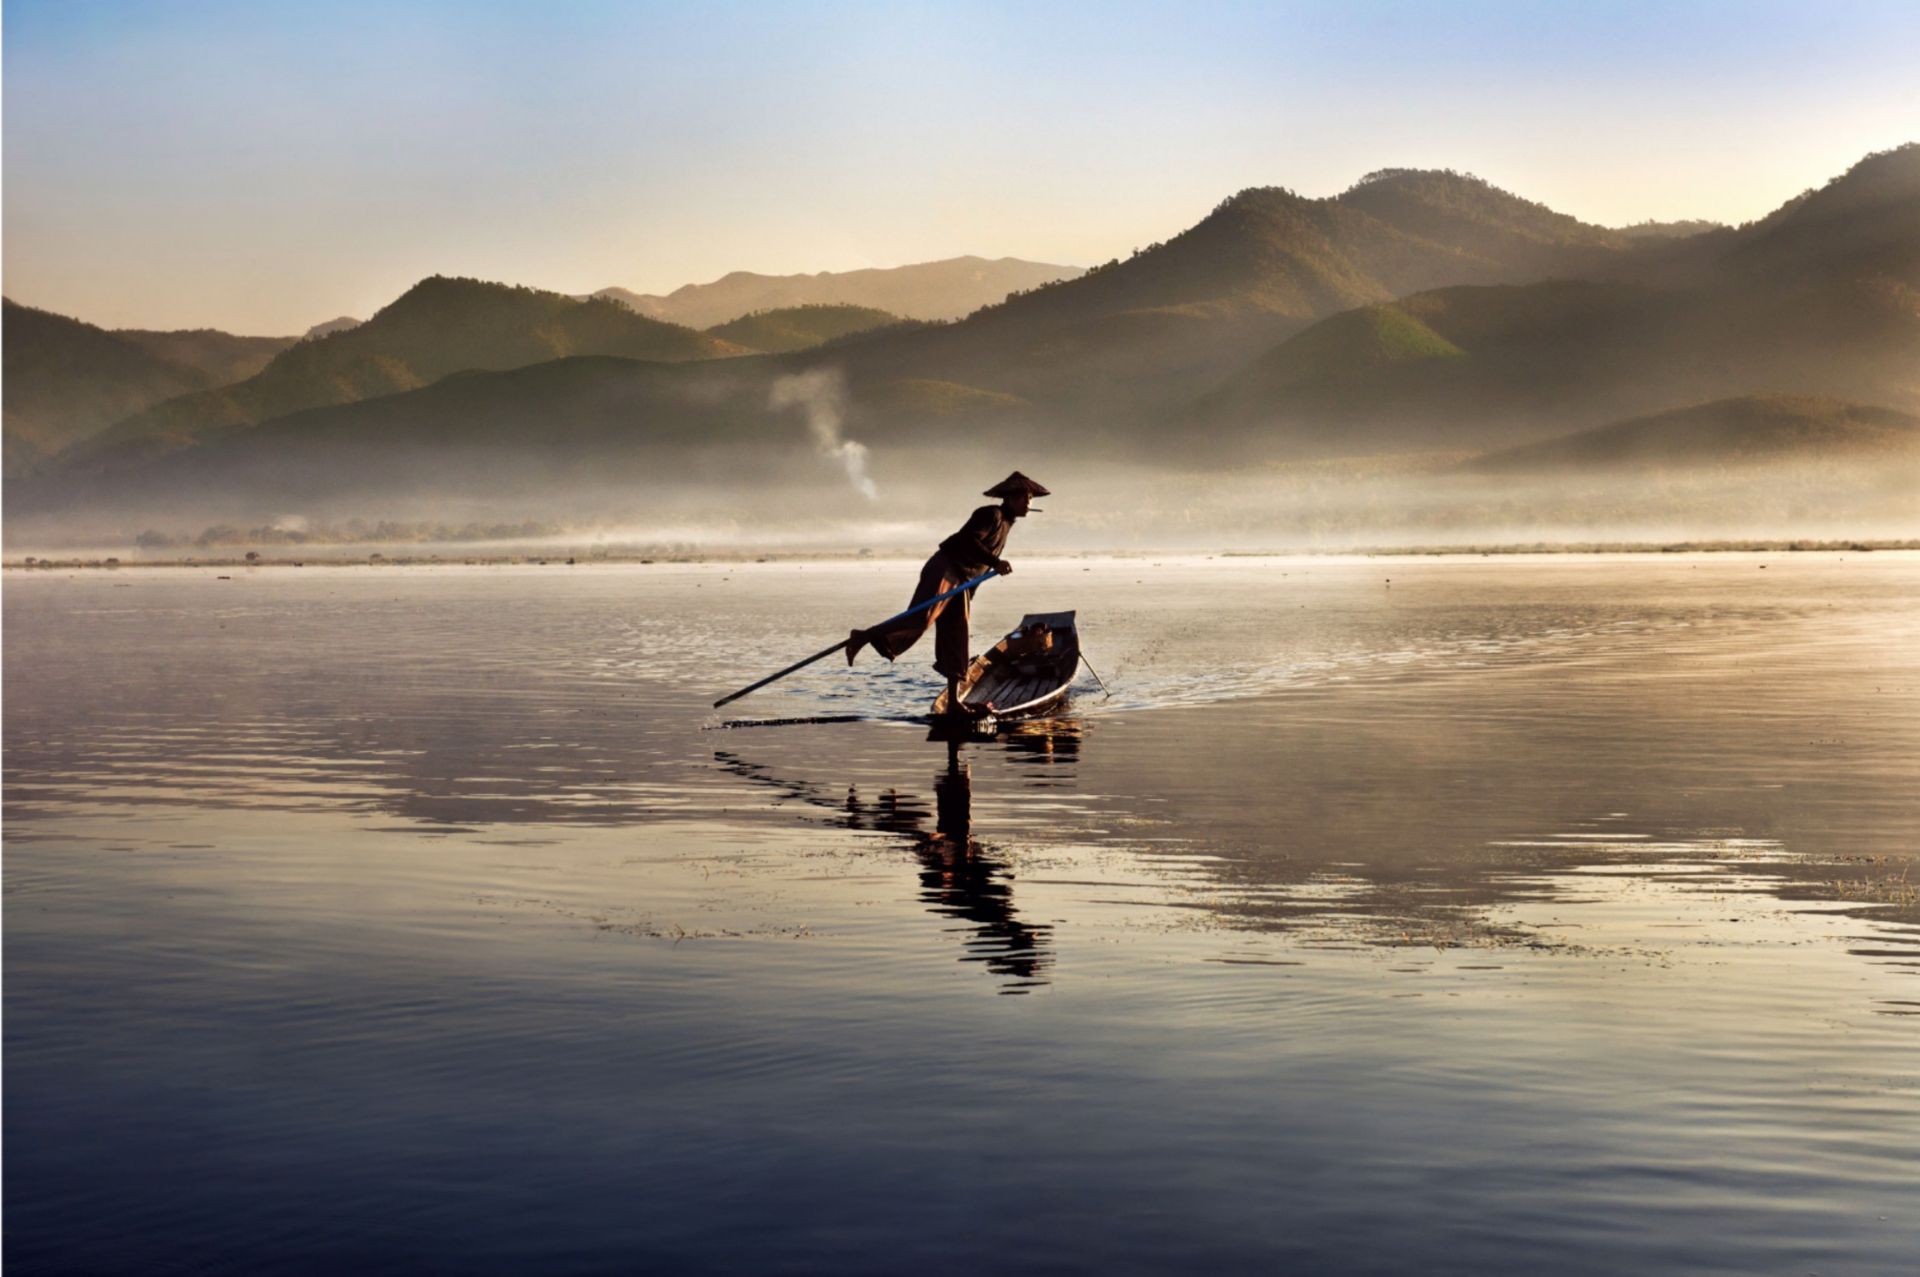 Steve McCurry "Burma, 2011" Photo Print